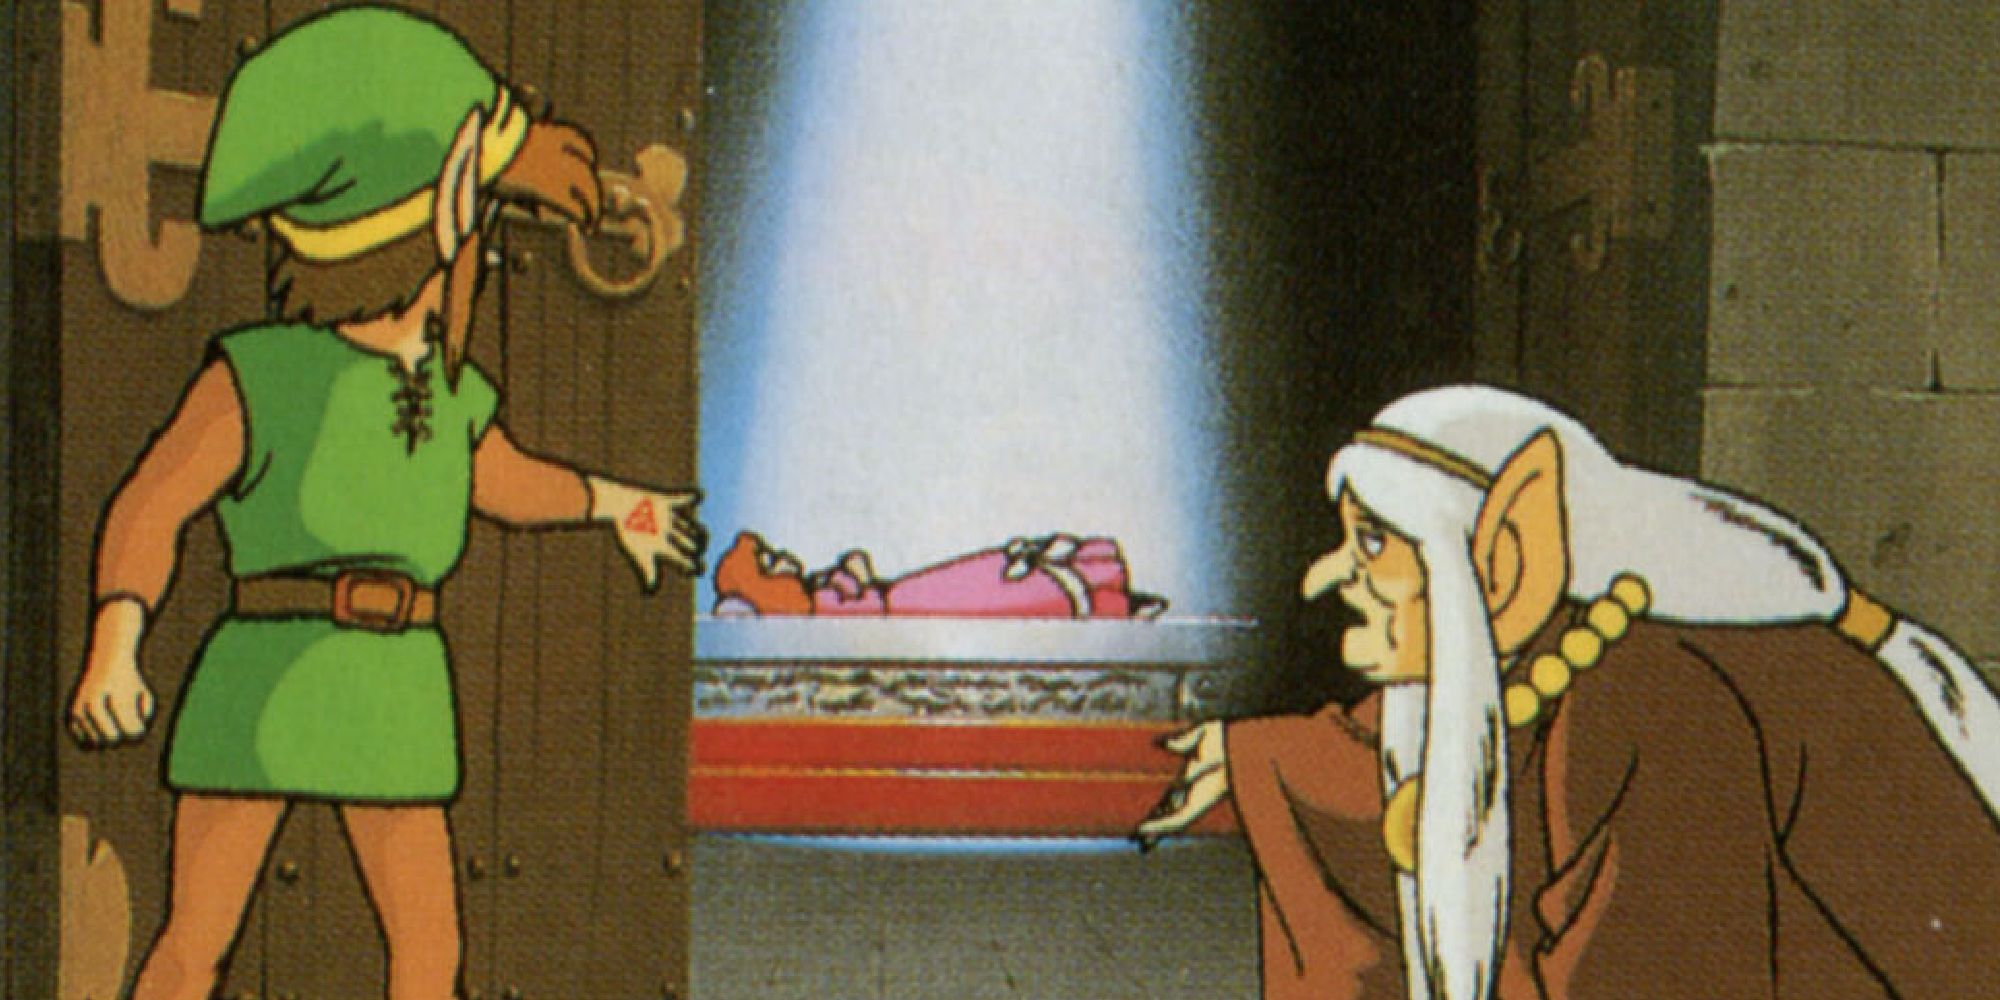 Impa showing Link the sleeping Princess Zelda in the manual for Zelda II